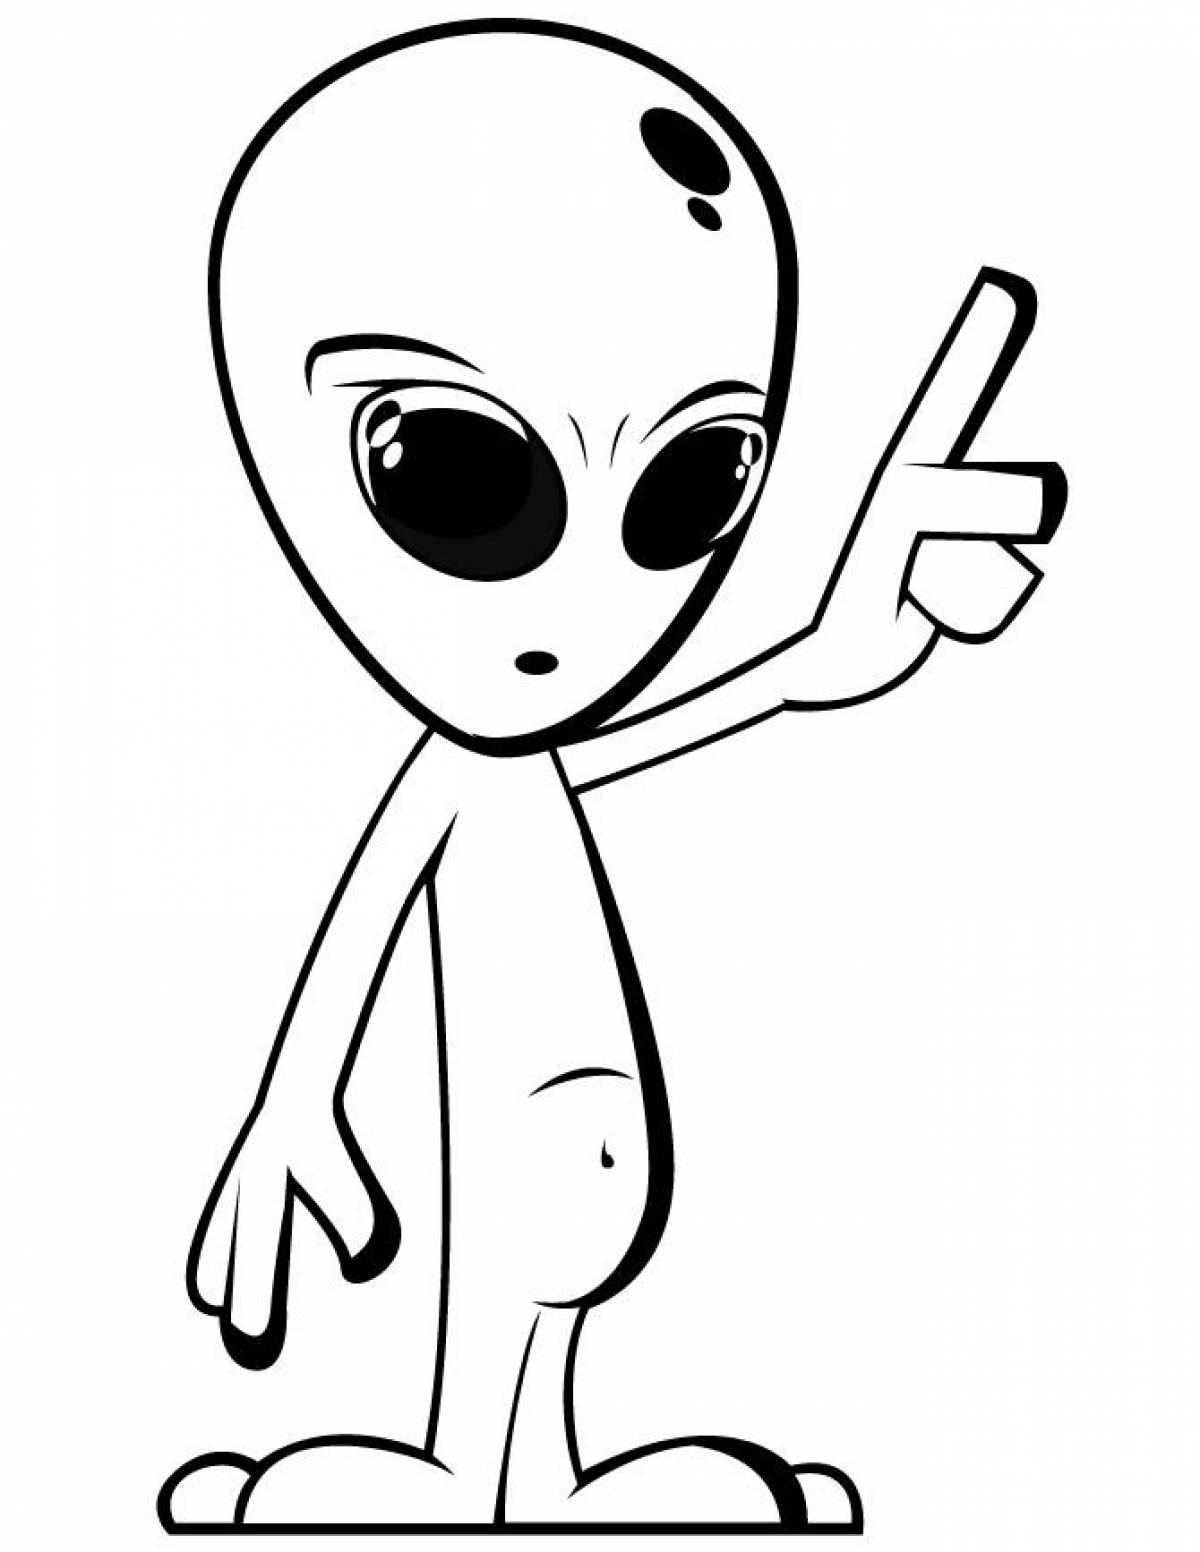 Fantastic alien coloring page